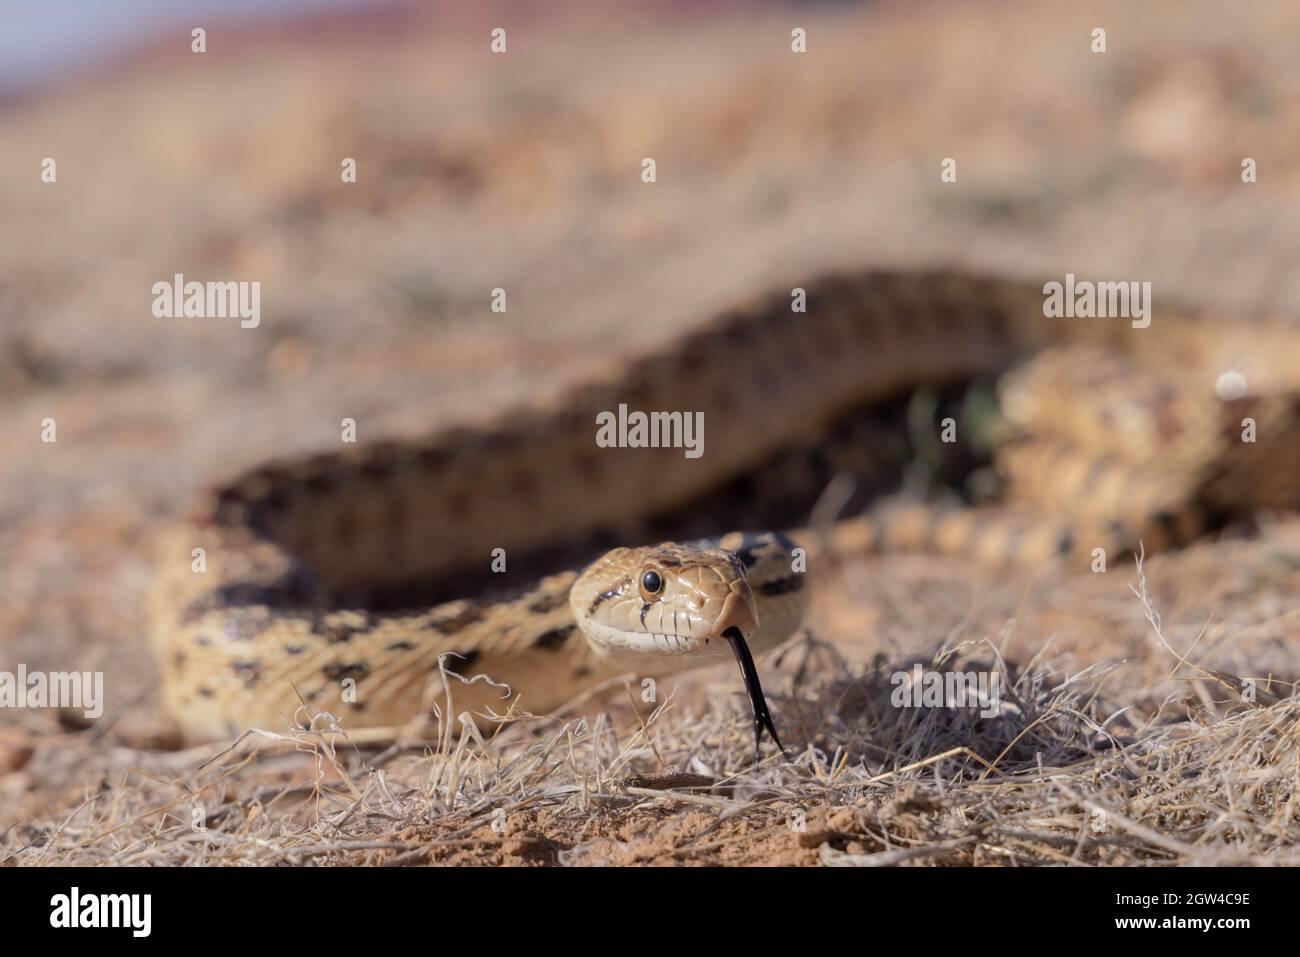 Great Basin Gopher Snake, contea di Coconino, Arizona, USA. Foto Stock